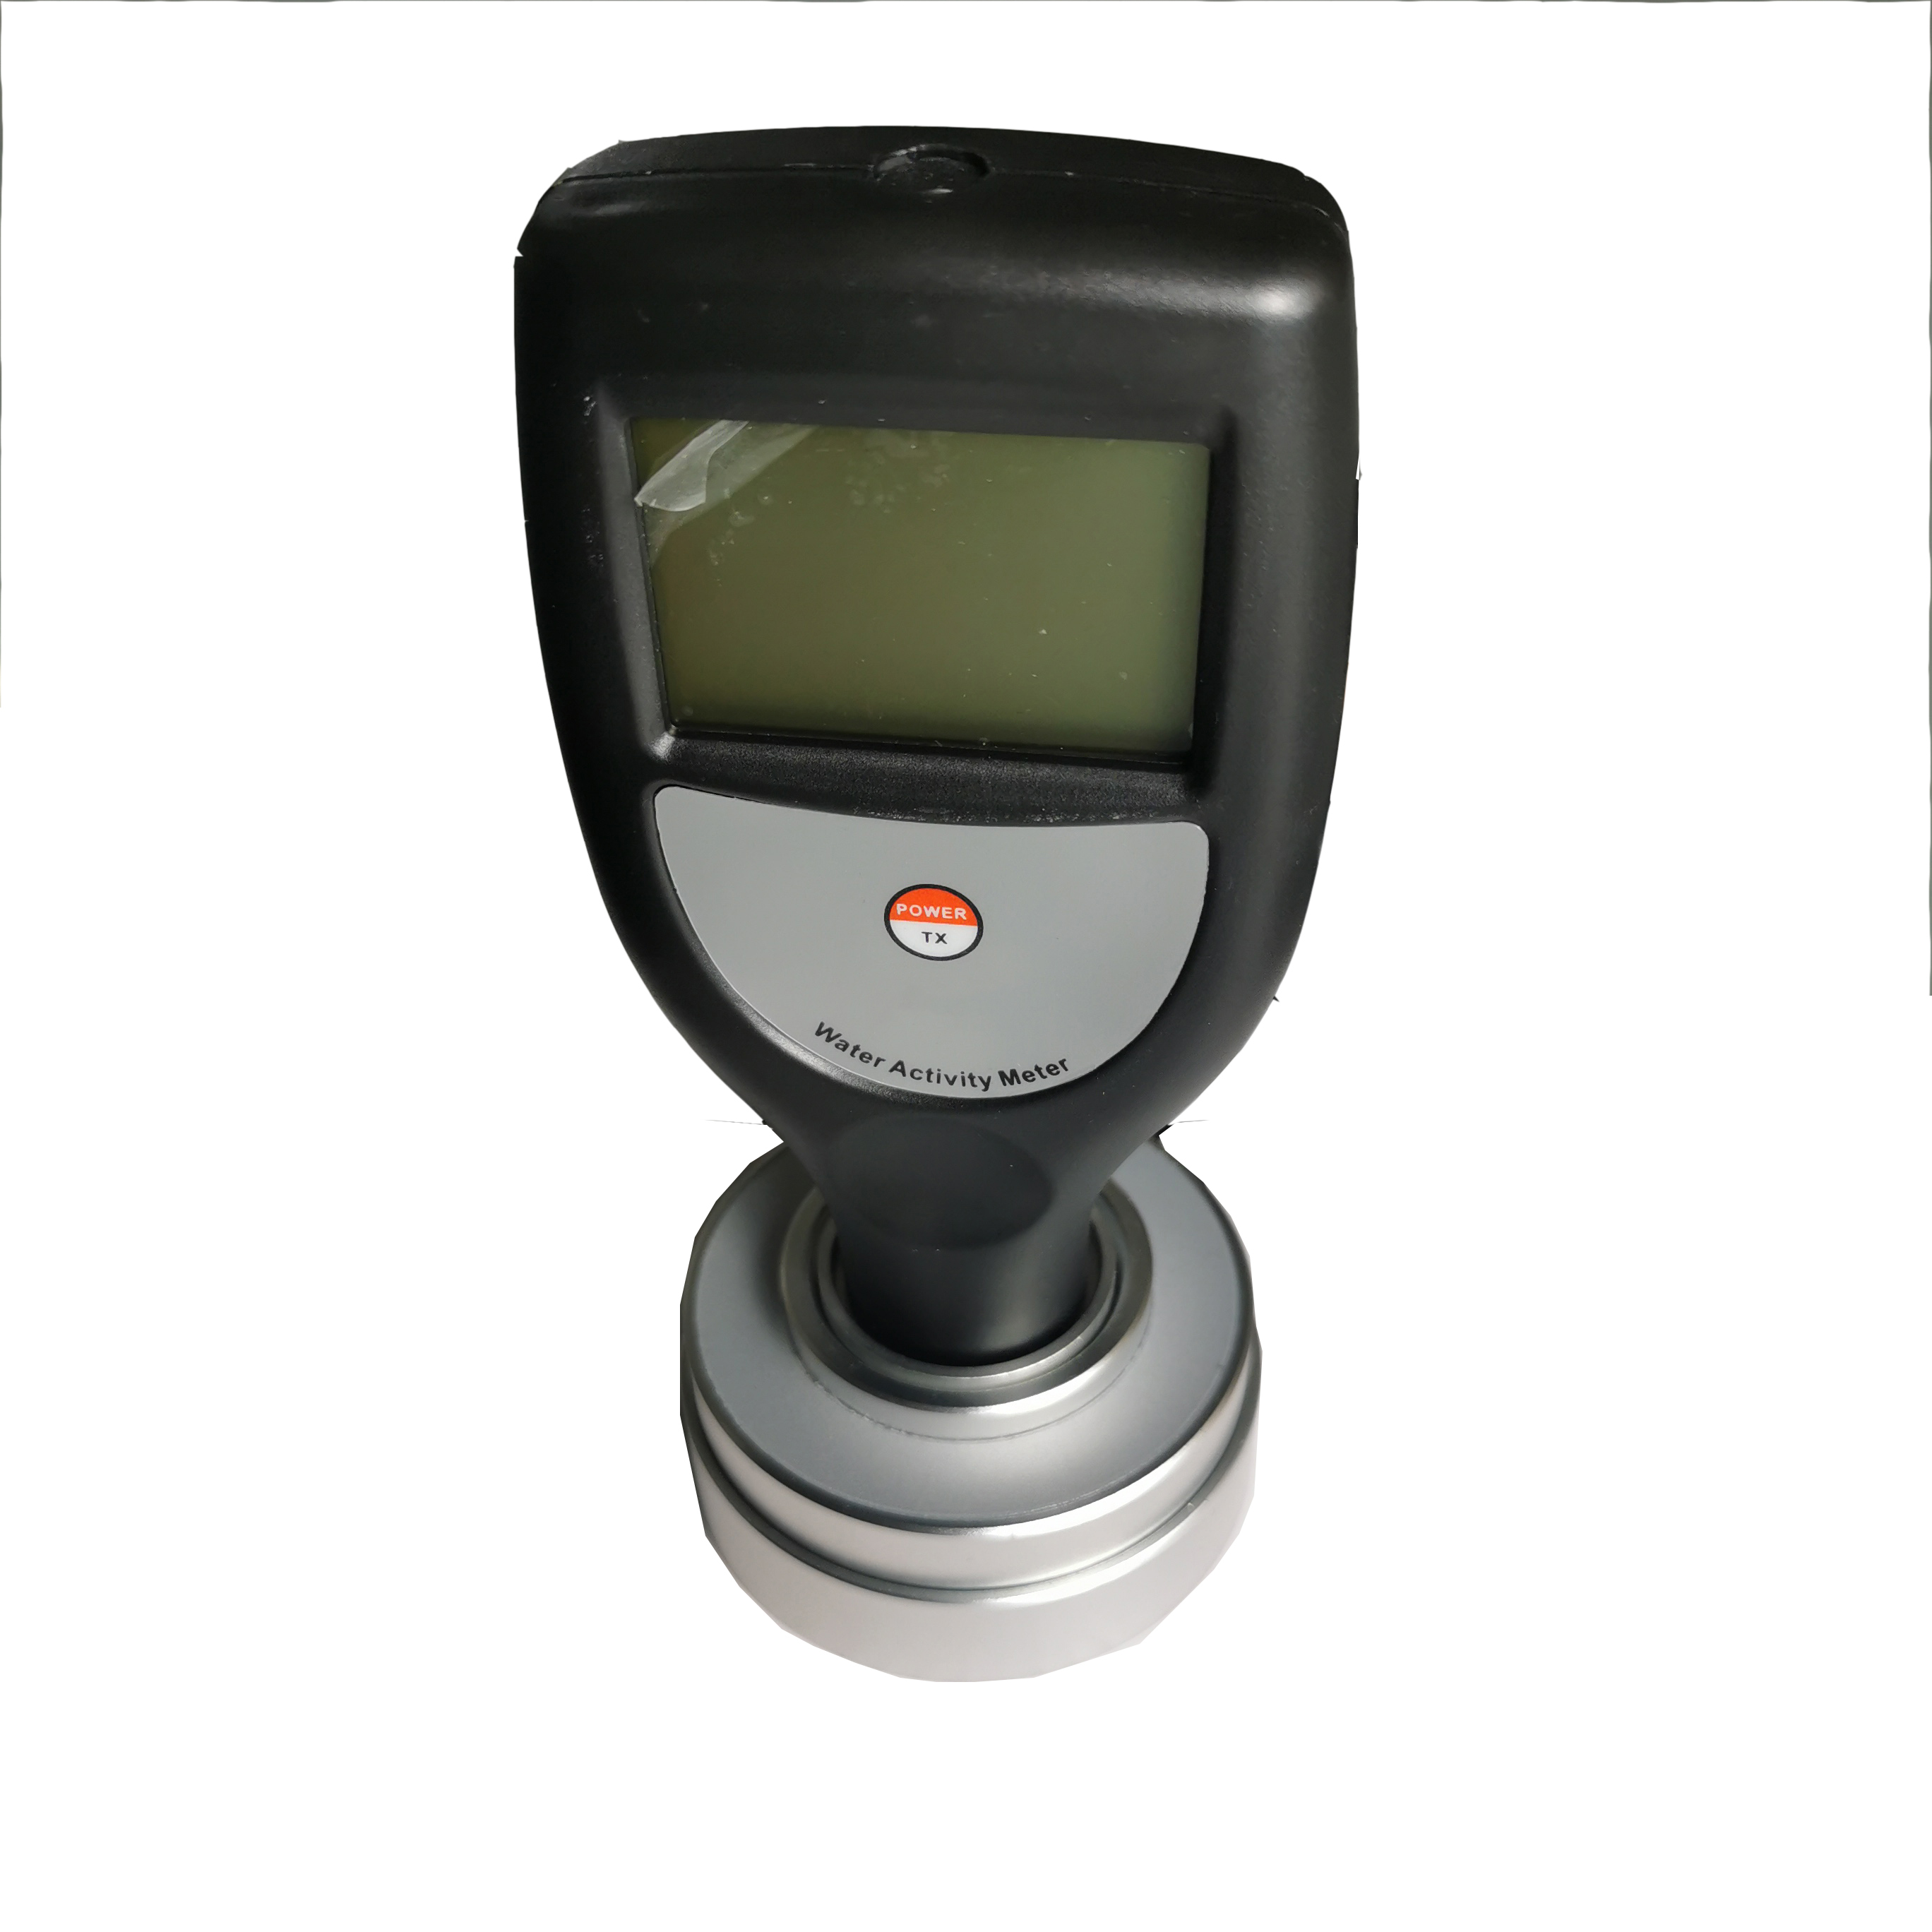 NADE portable water activity meter